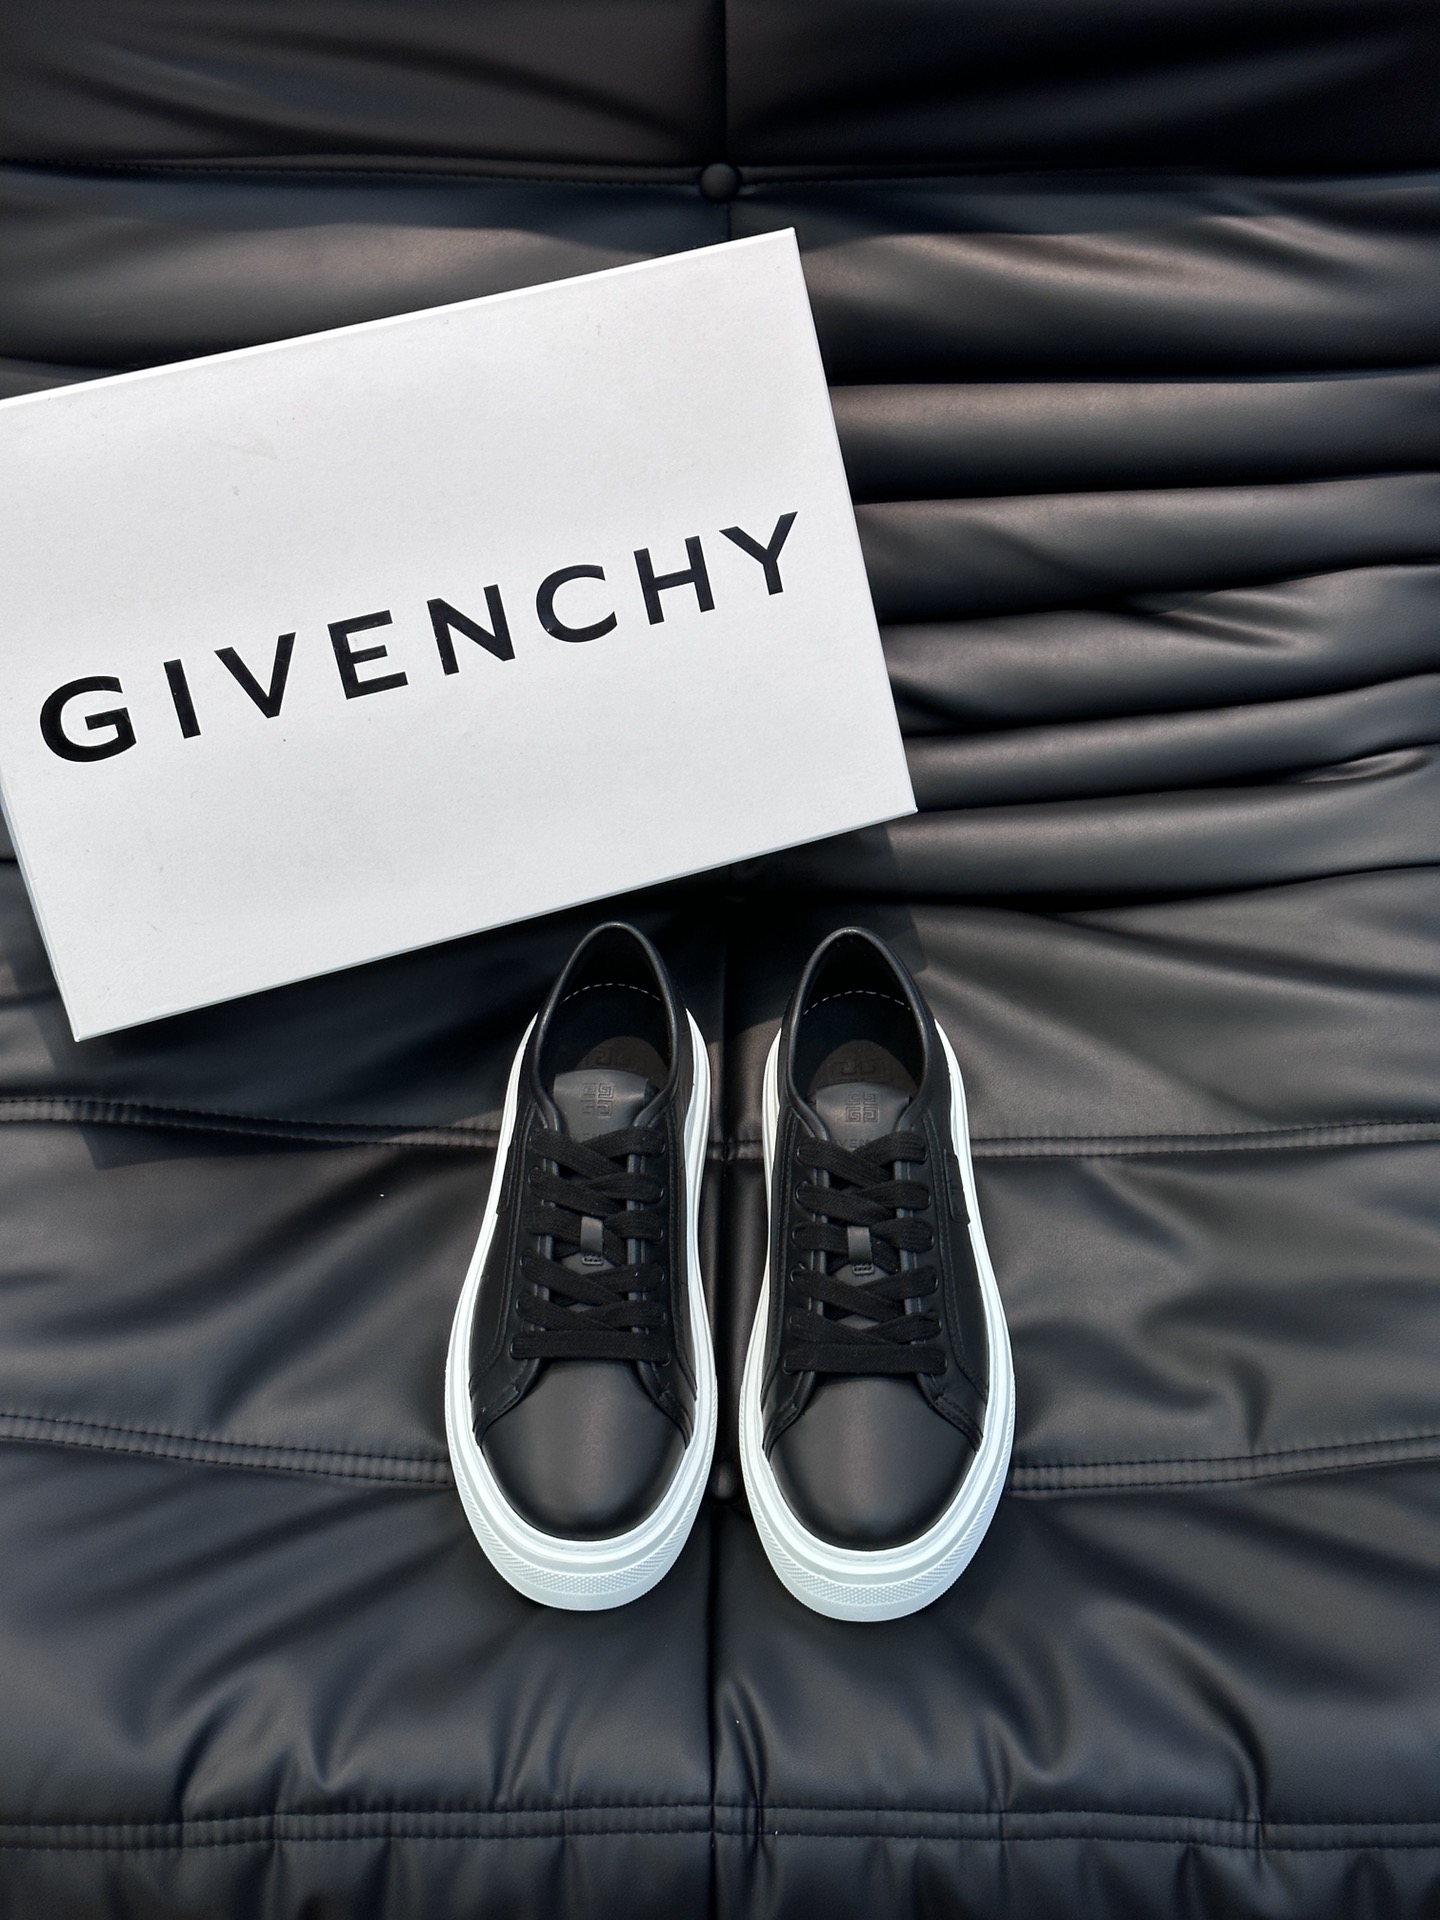 Givench*.纪梵希情侣款厚底休闲鞋采用进口小牛皮打造鞋身饰有真皮品牌标装饰鞋舌真皮logo装饰立体